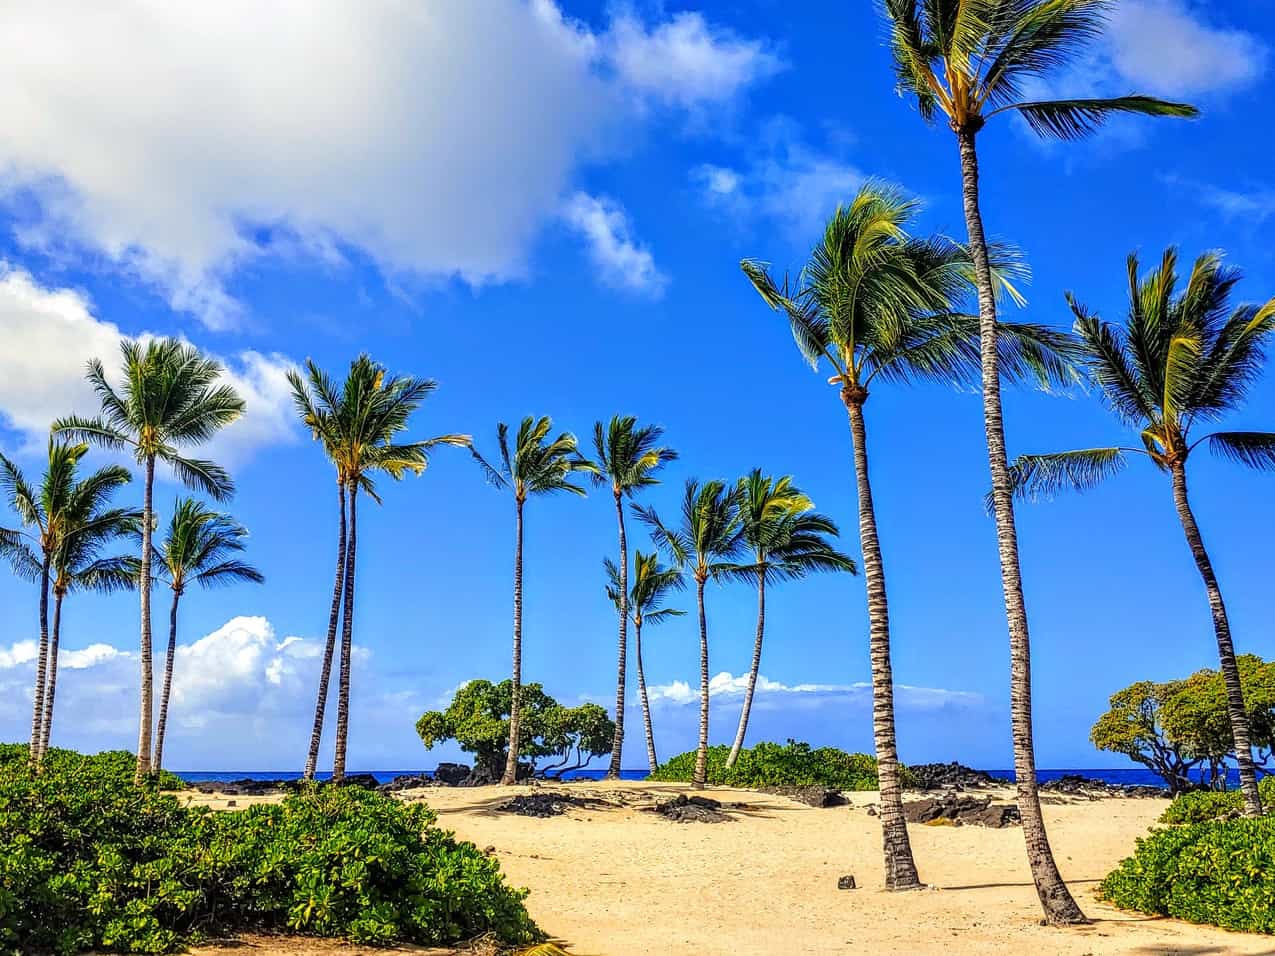 Palm trees and sand on the beach - Big Island Hawaii